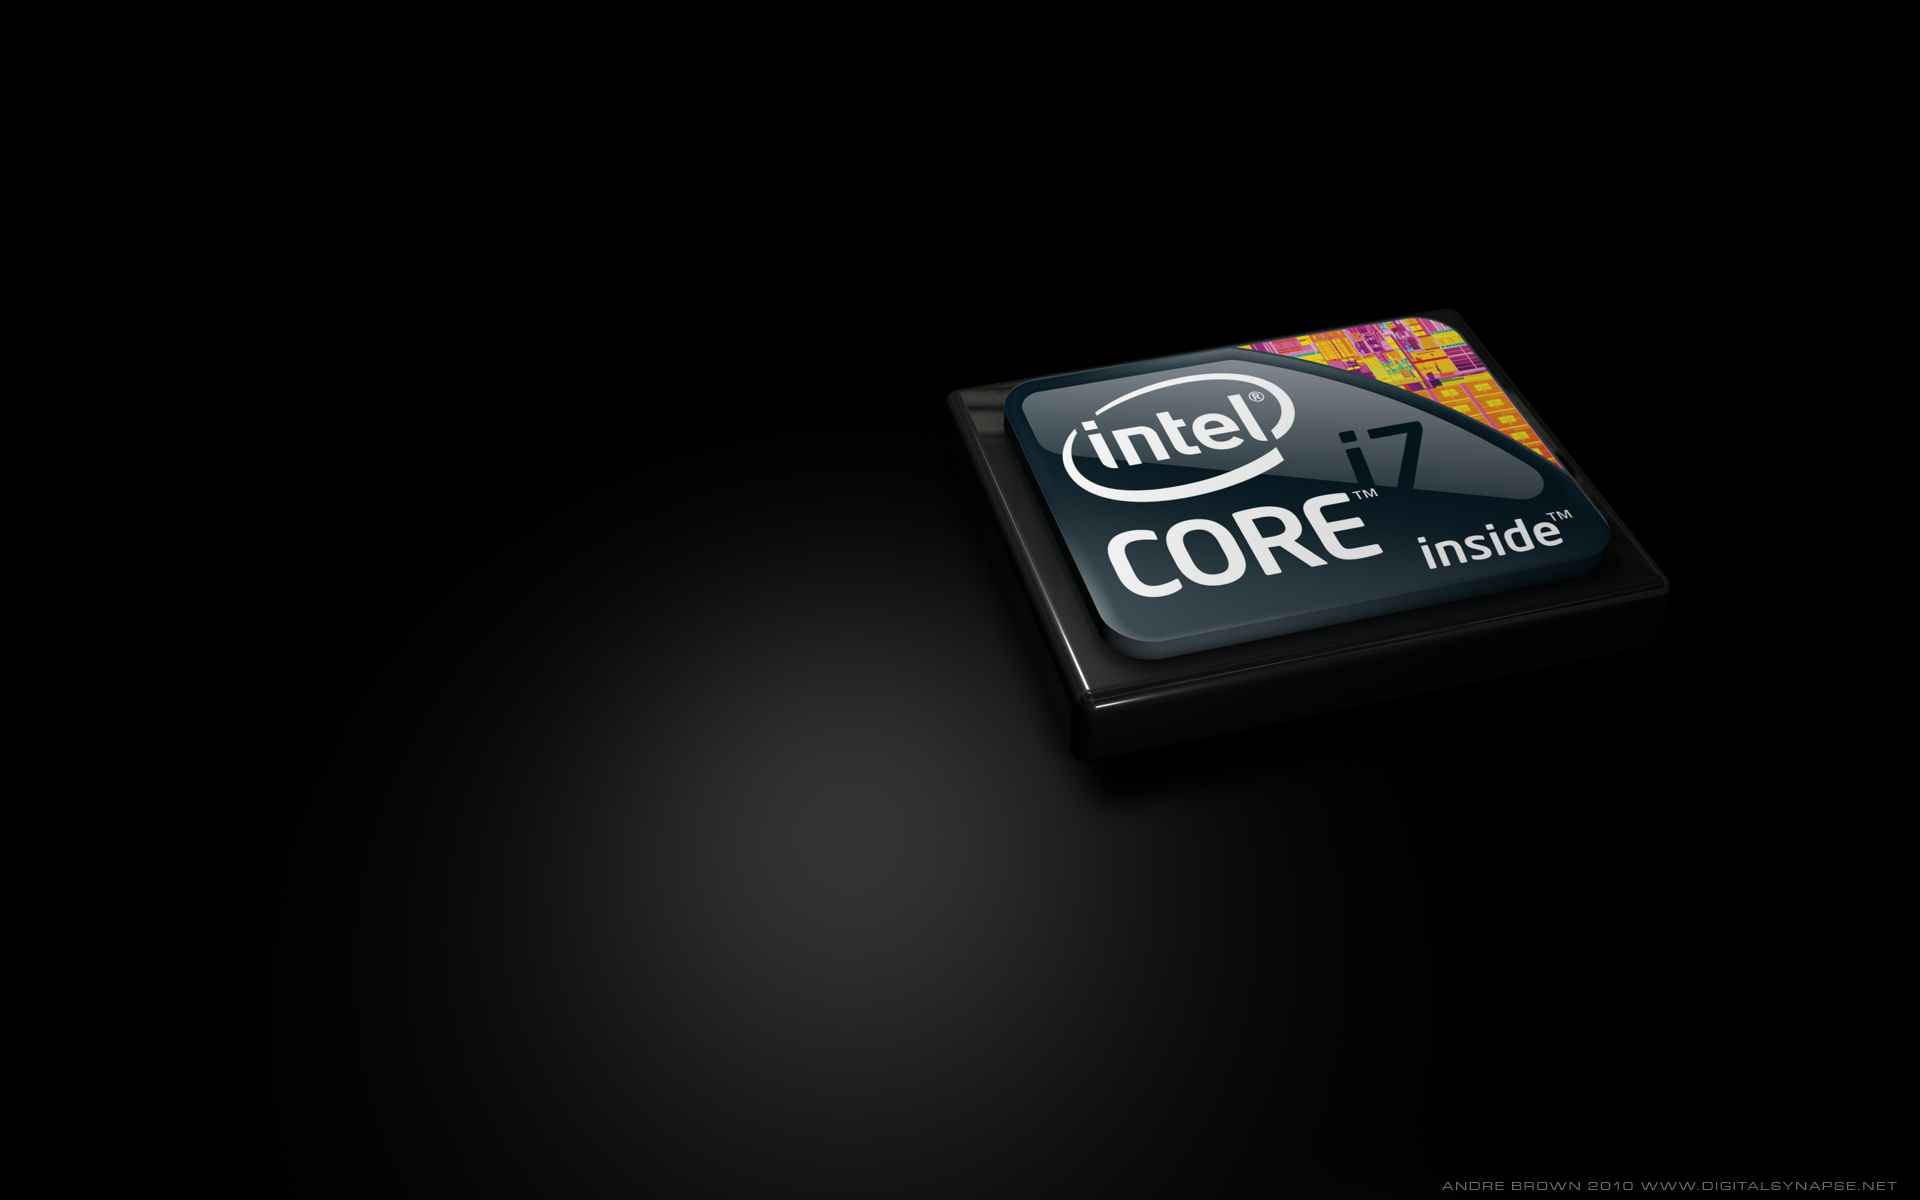 Intel Core I7 Wallpaper HD Full Pictures